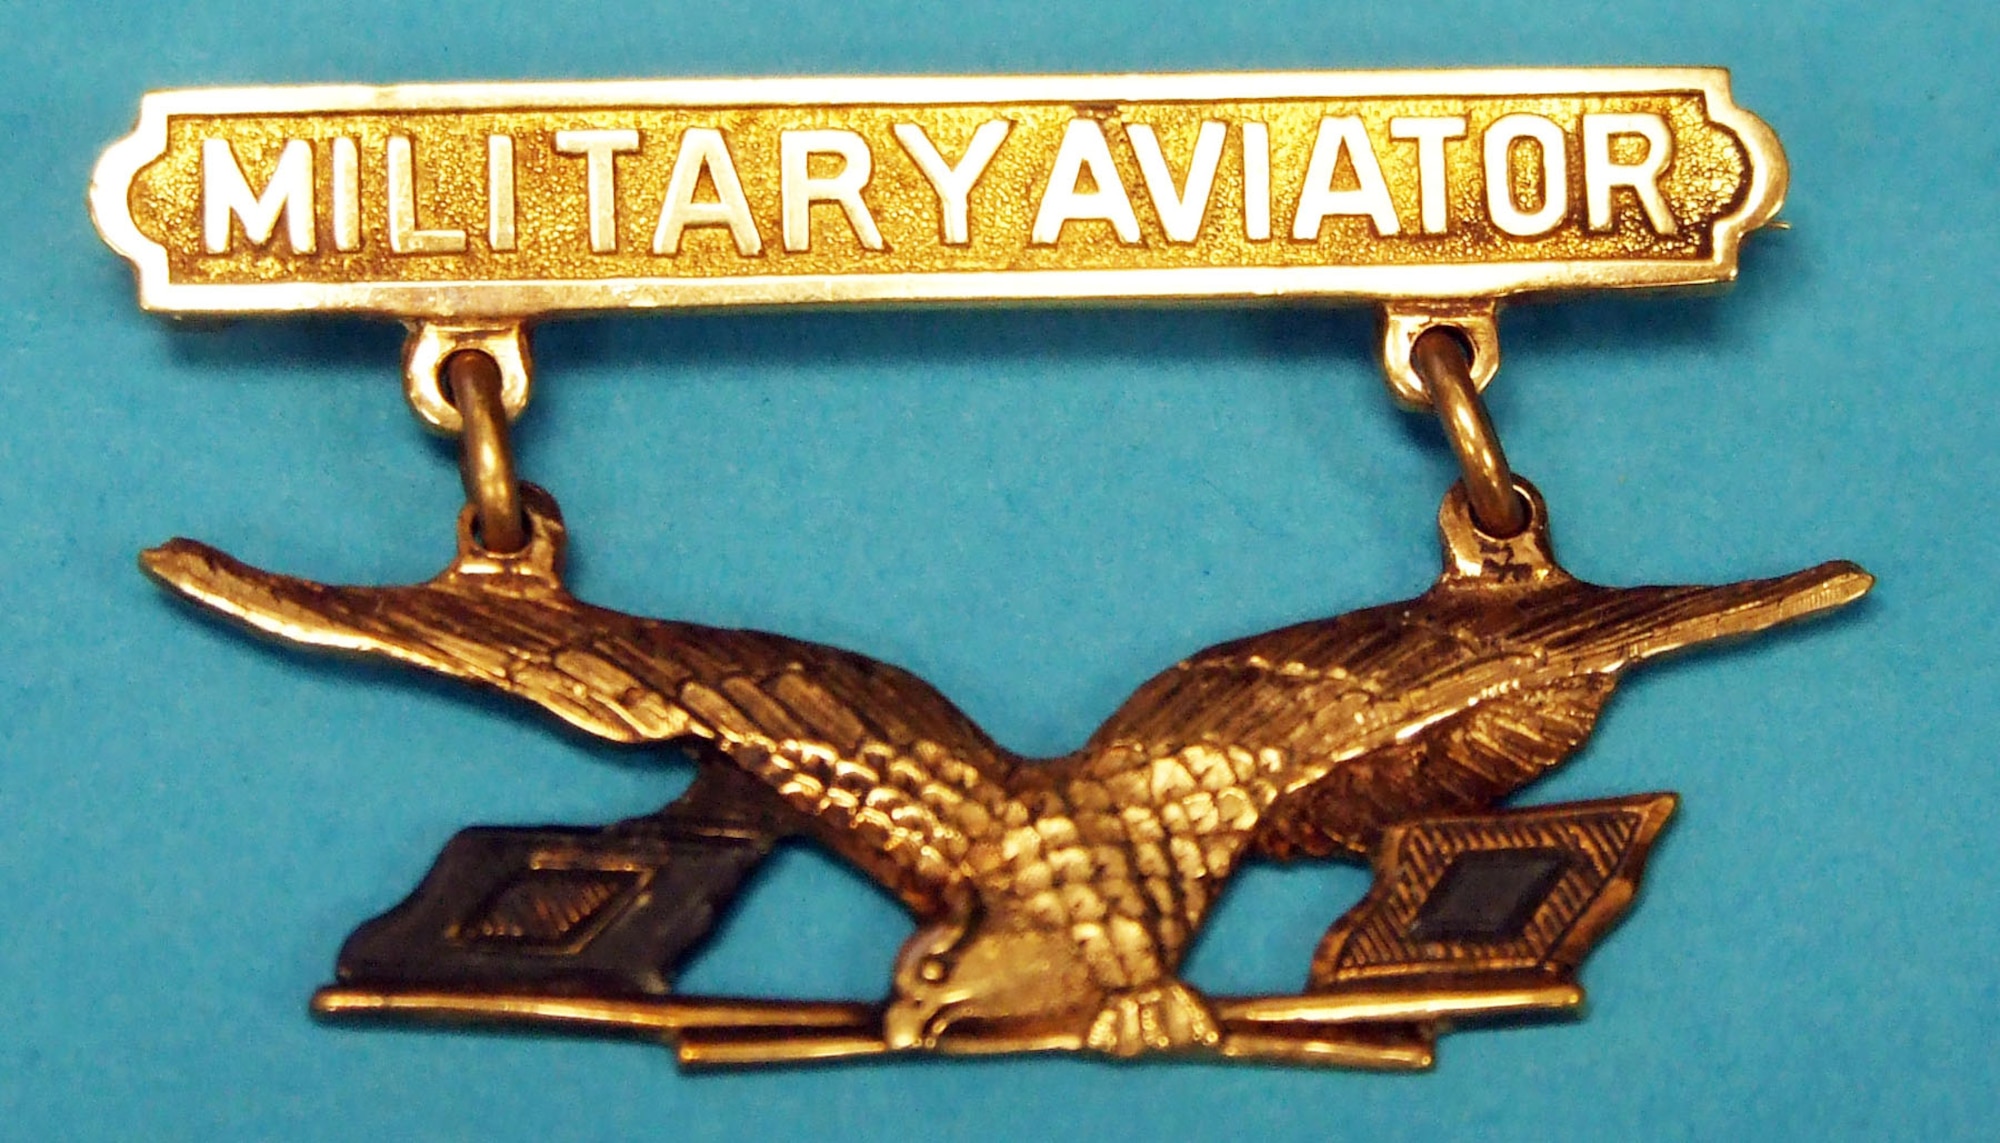 Lt. Hollis LeRoy Muller's military aviator badge. (U.S. Air Force photo)